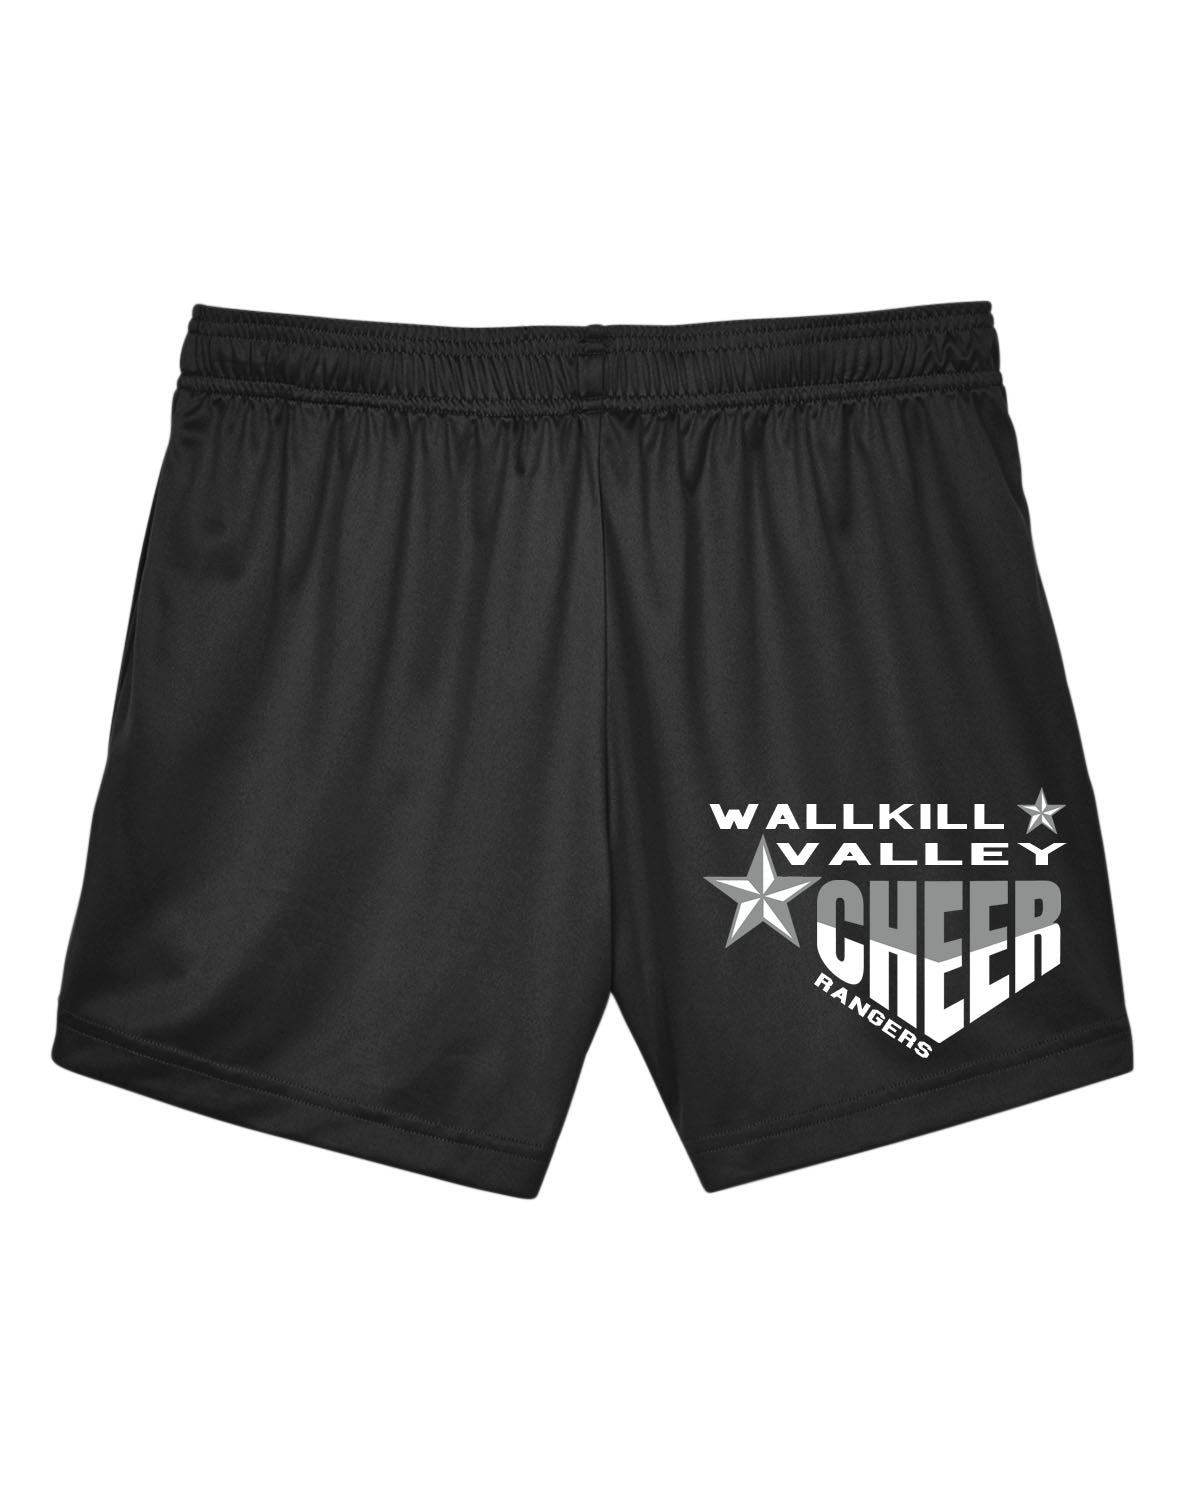 Wallkill Cheer Ladies Performance Design 5 Shorts